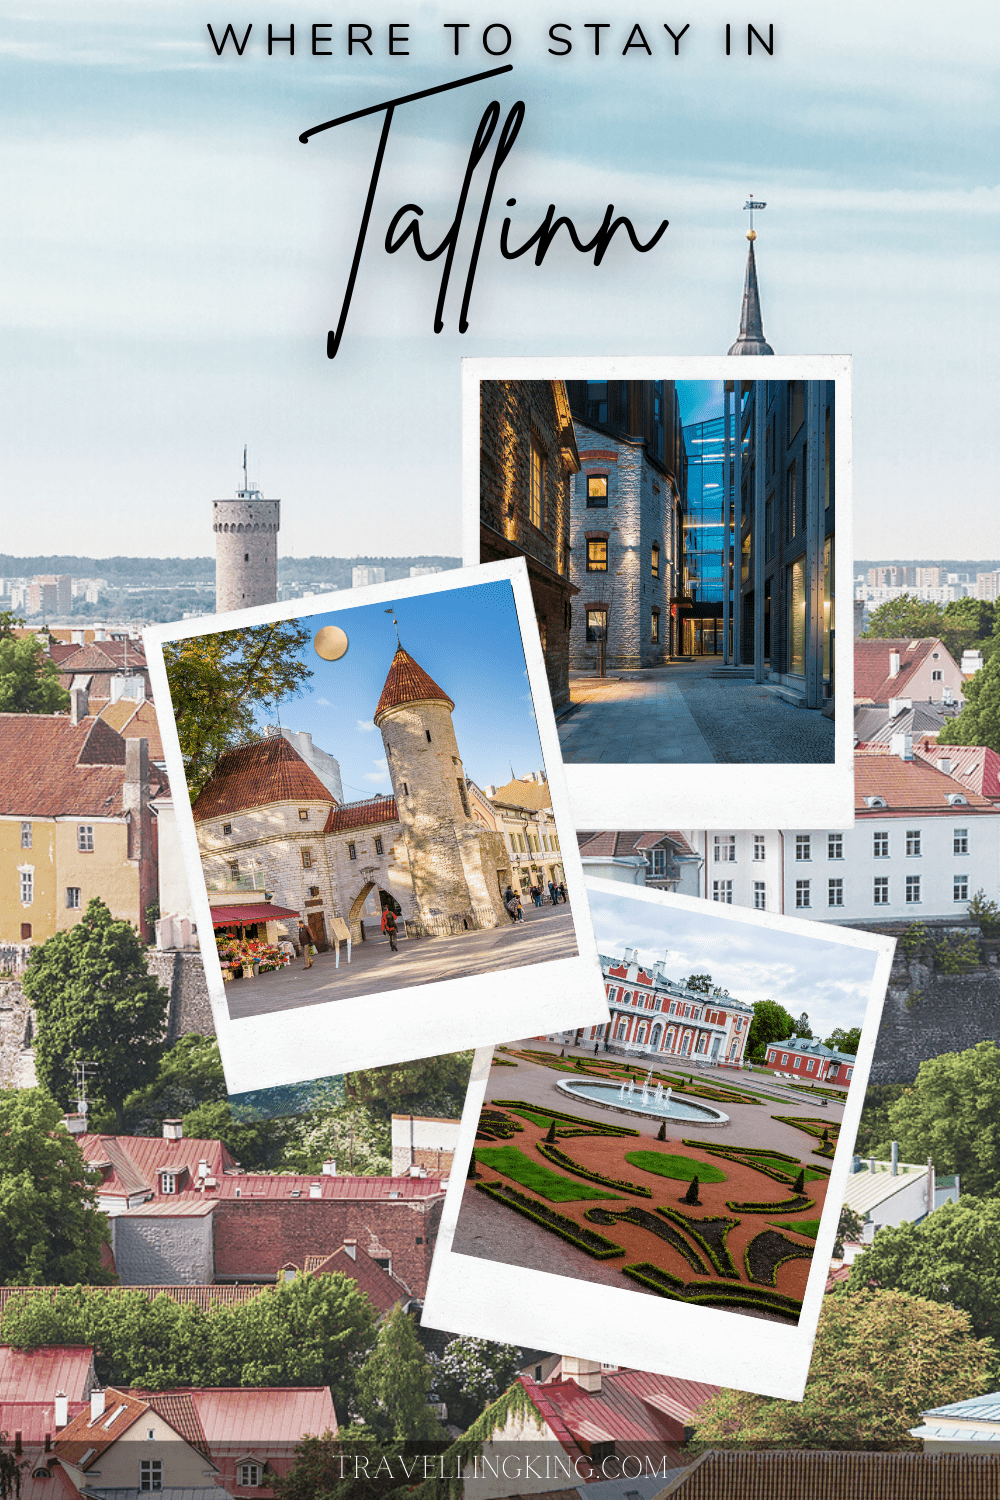 Where to stay in Tallinn